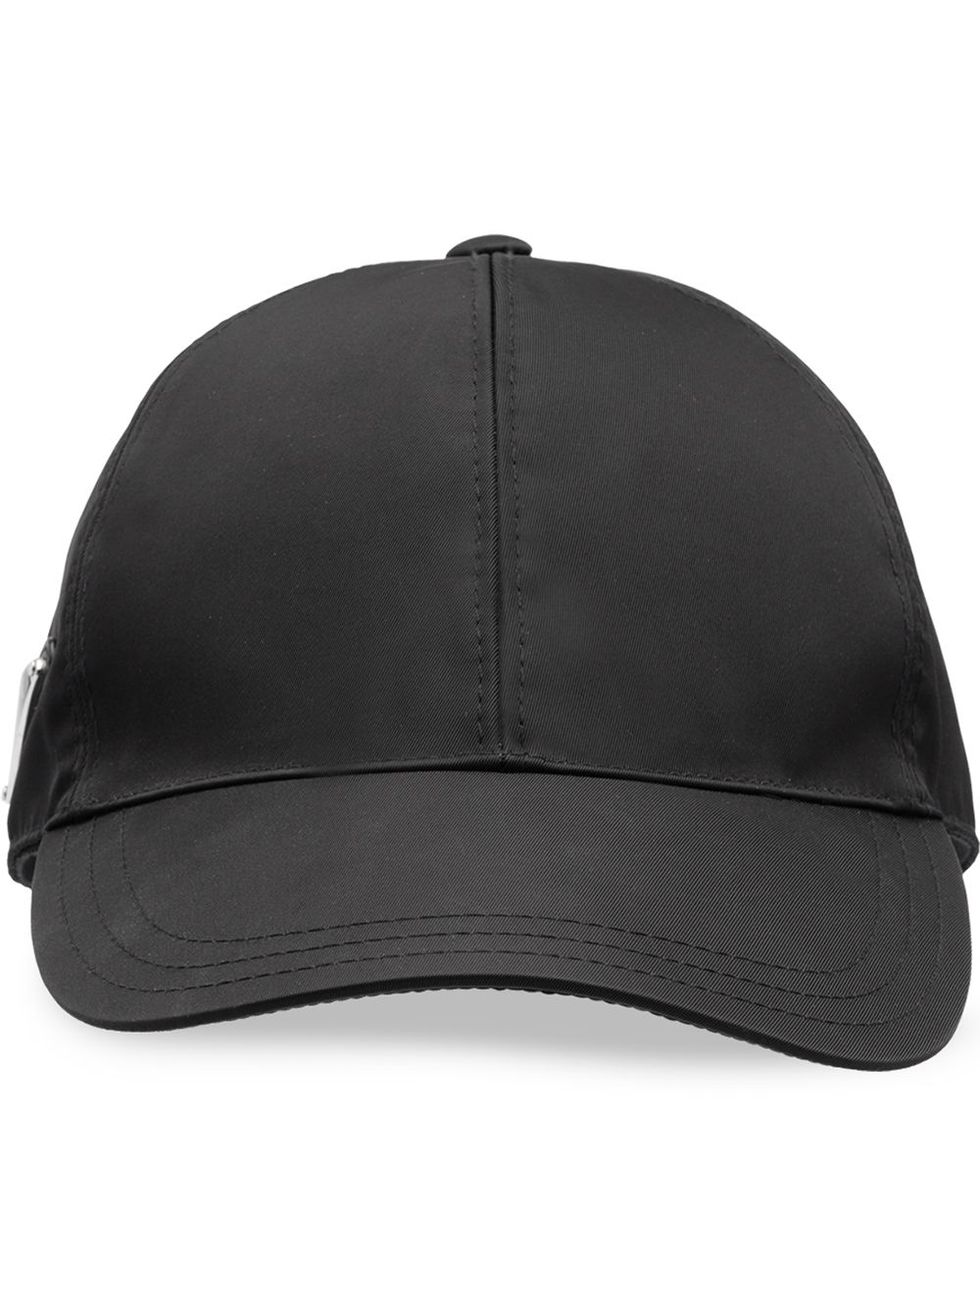 Kendall Jenner穿搭單品推薦：Prada黑色棒球帽